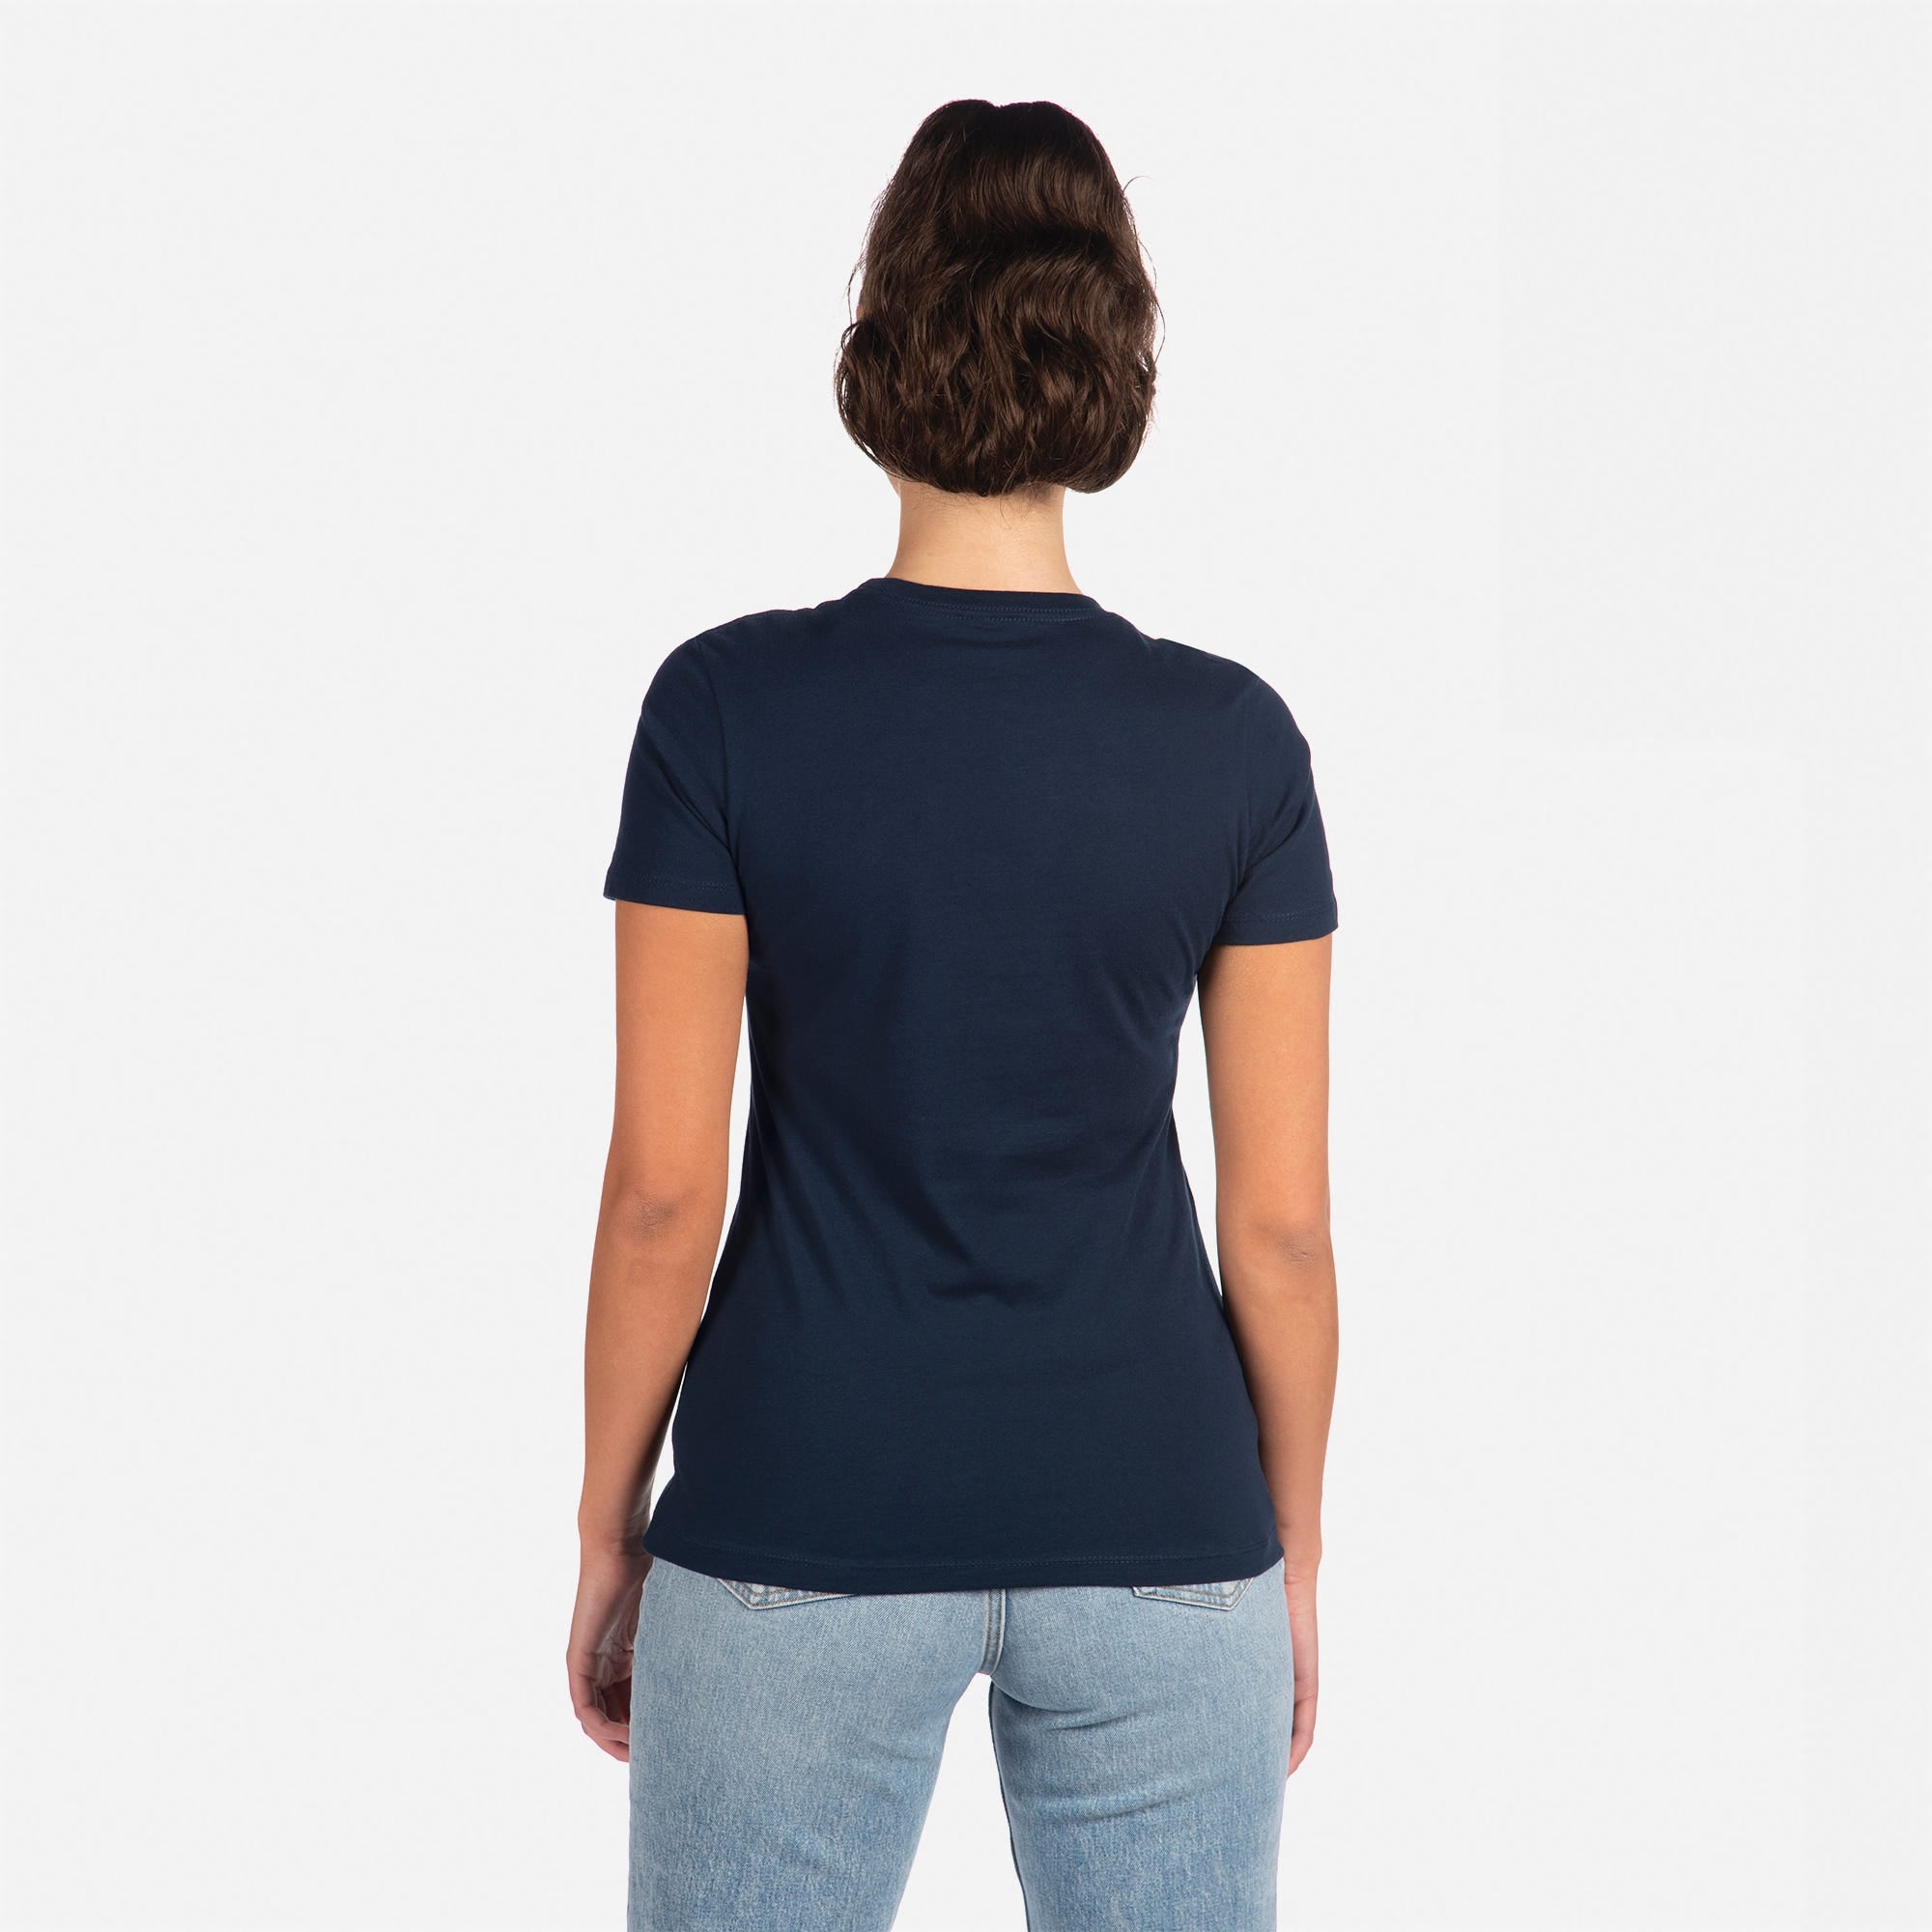 Cotton Boyfriend T-Shirt Midnight Navy 3900 Next Level Apparel Women's T-shirt